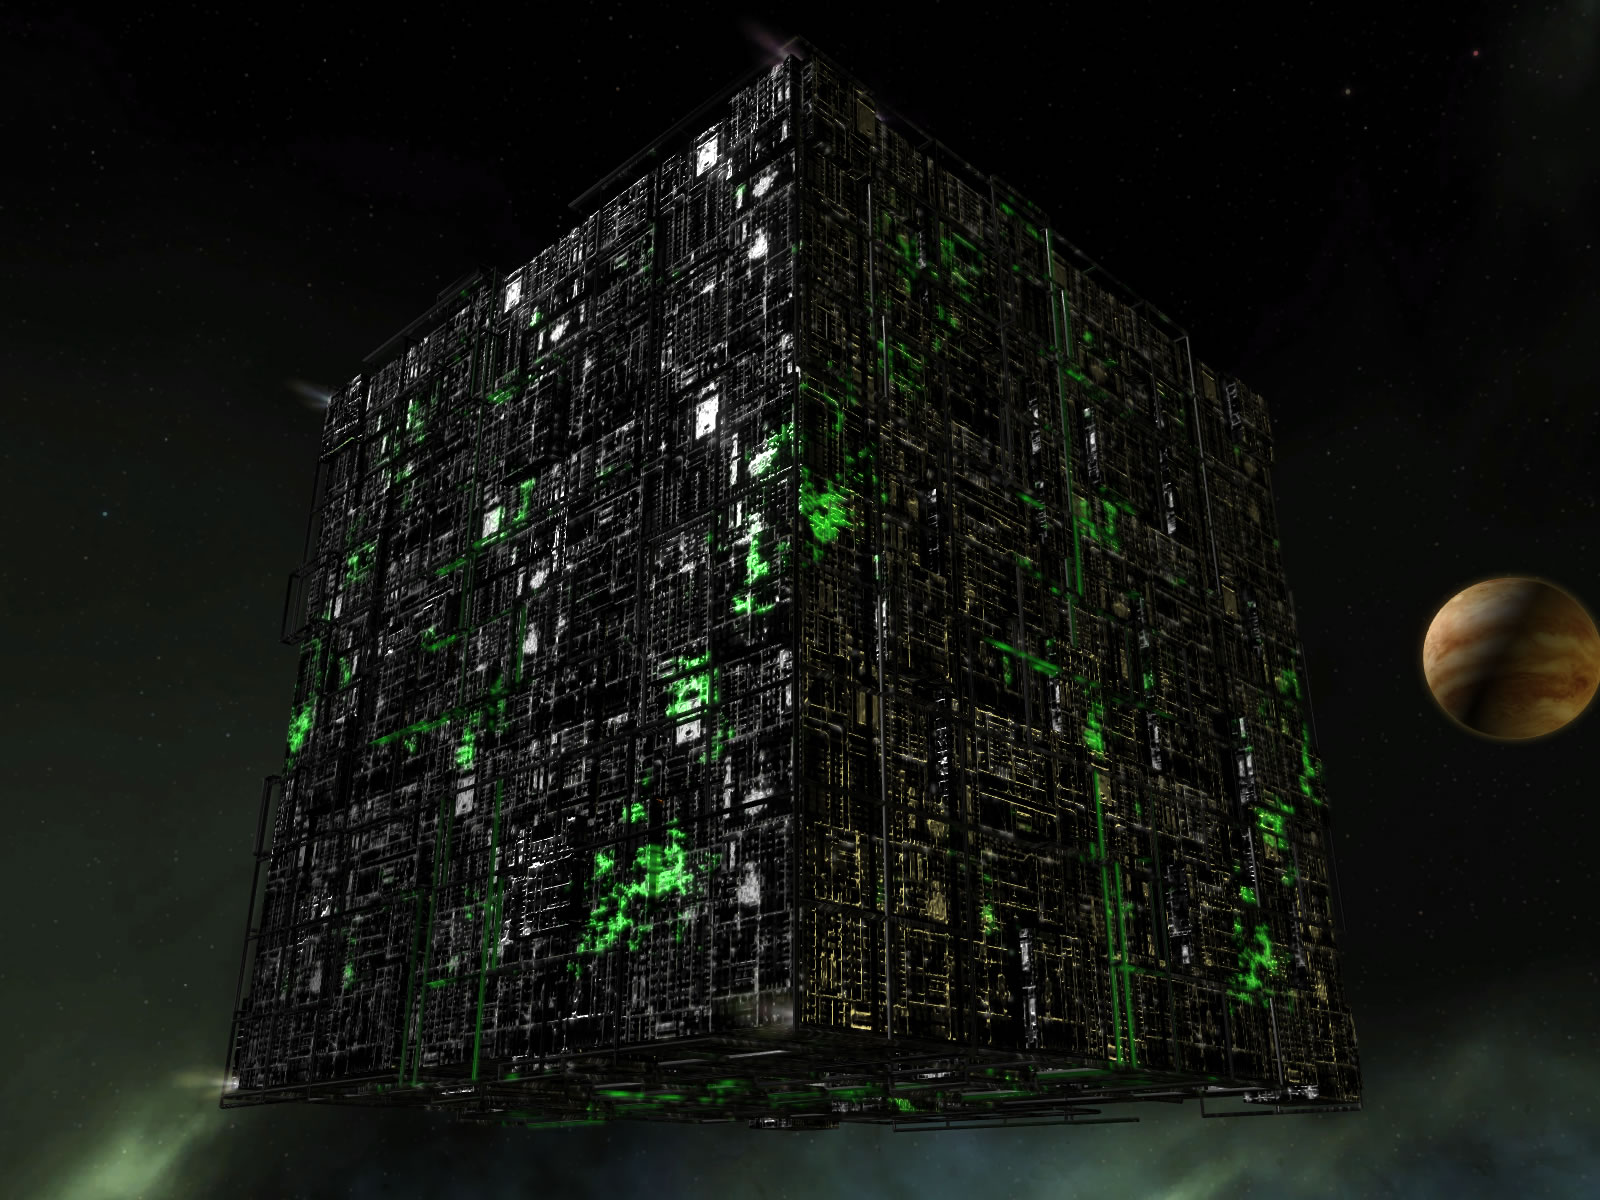 Borg Cube Delta Quadrant Resistance Is Futile Of Photoboats